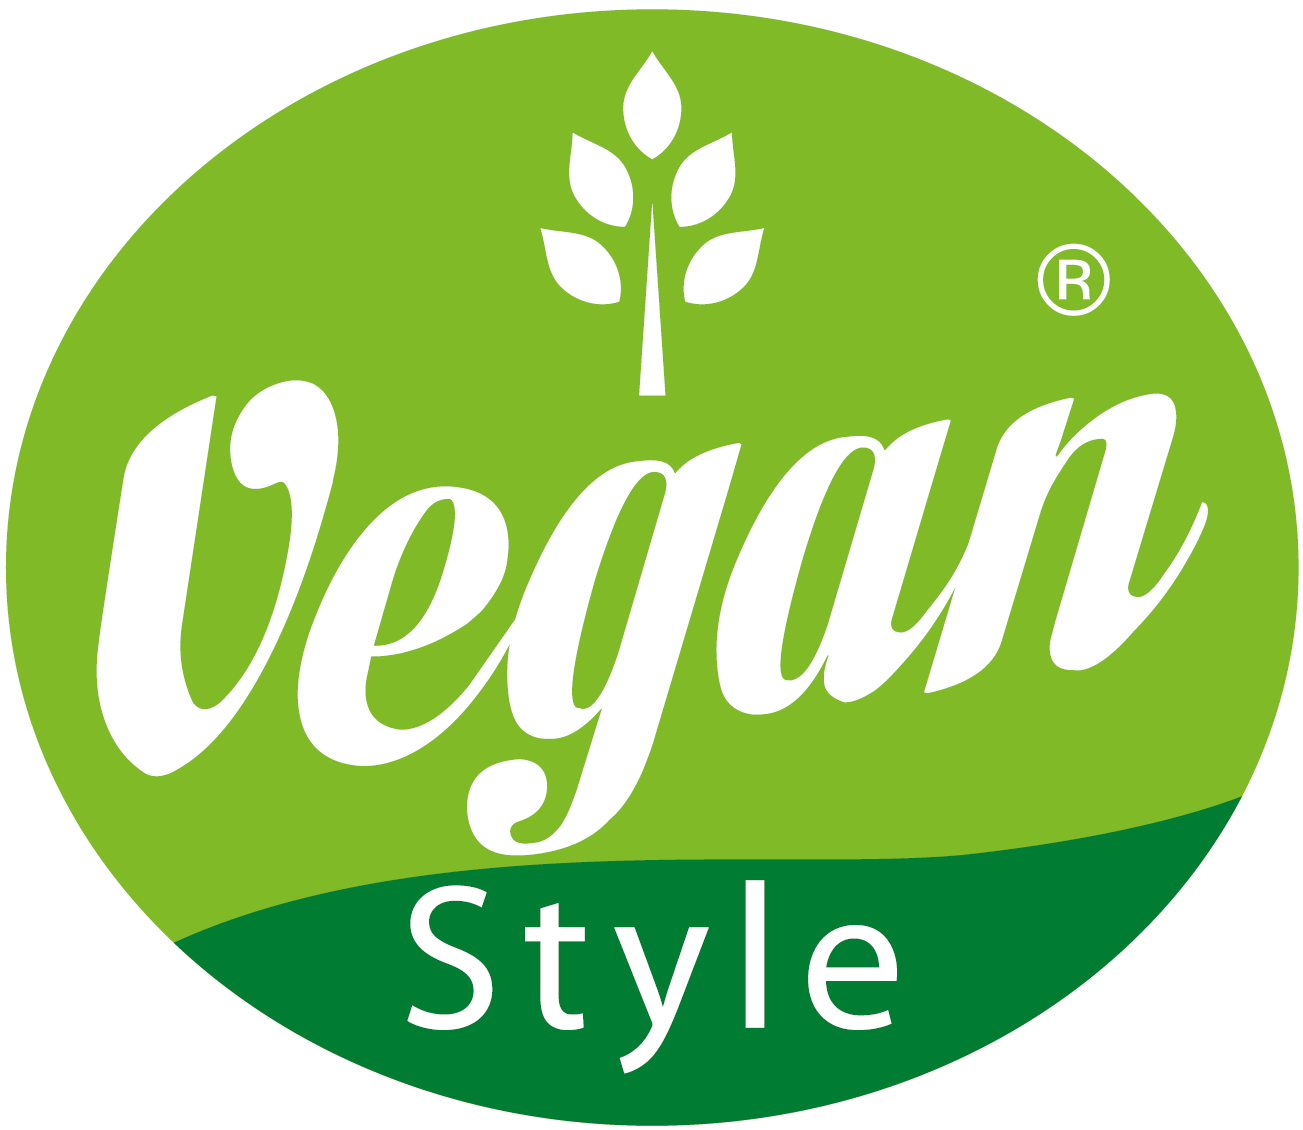 Vegan Style Food